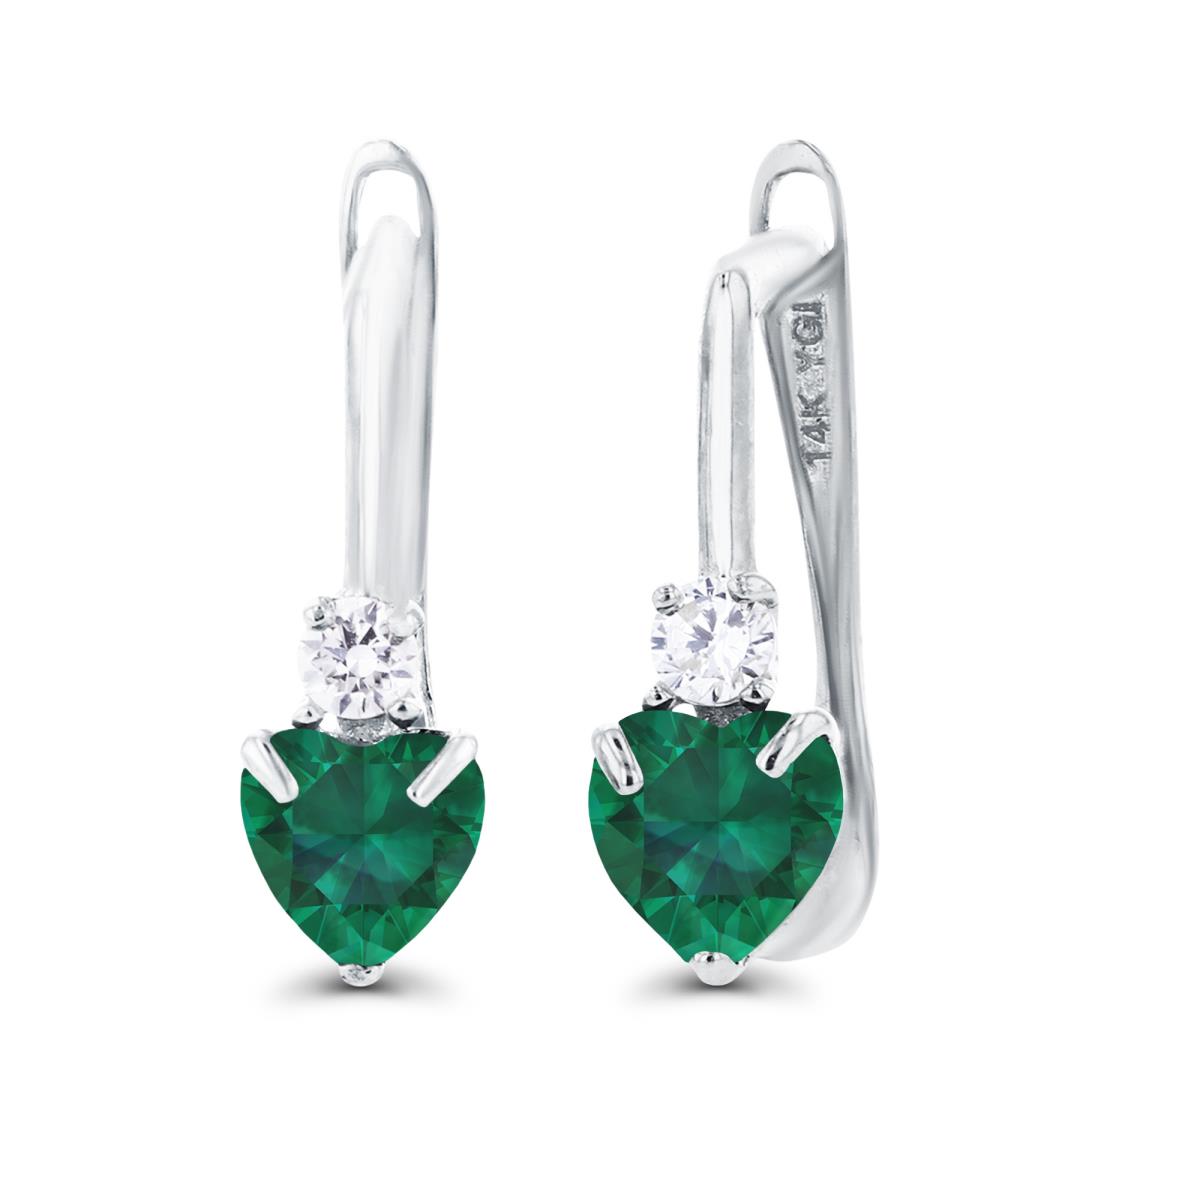 14K White Gold 4mm Heart Created Emerald & Created White Sapphire Latchback Earrings